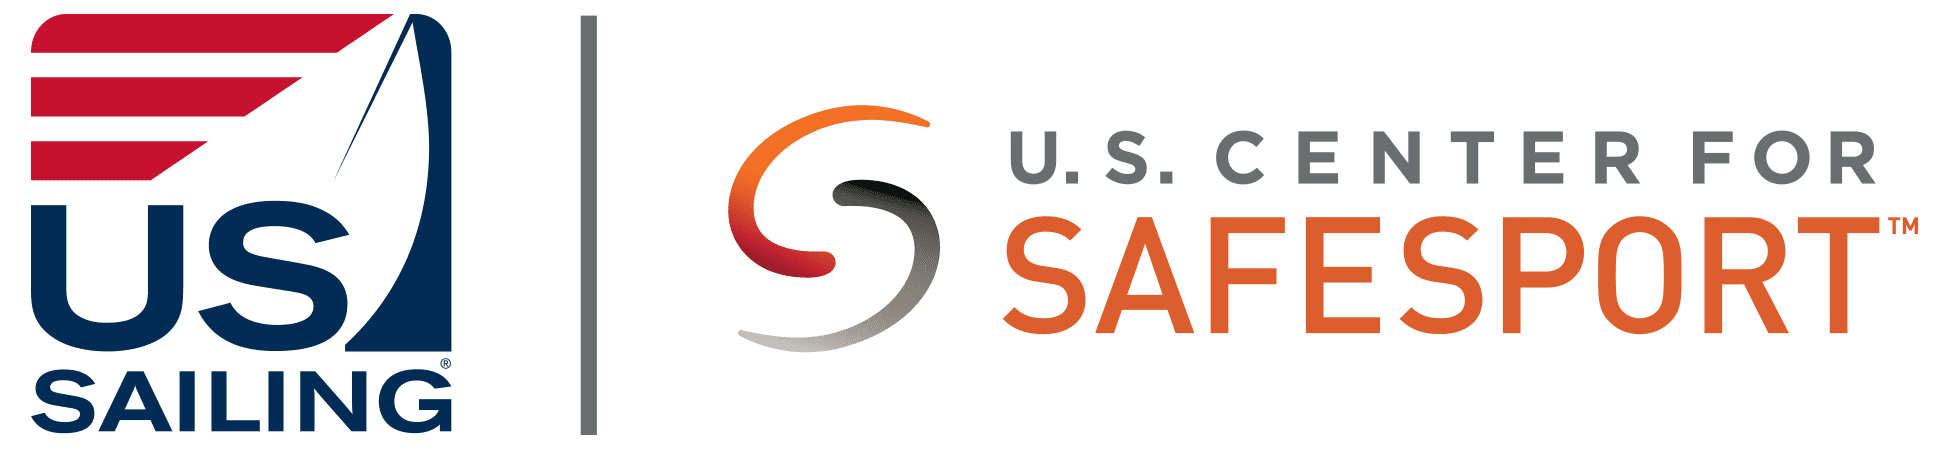 ussa-safesport-logo-lockup-4-color-wide-hi-res